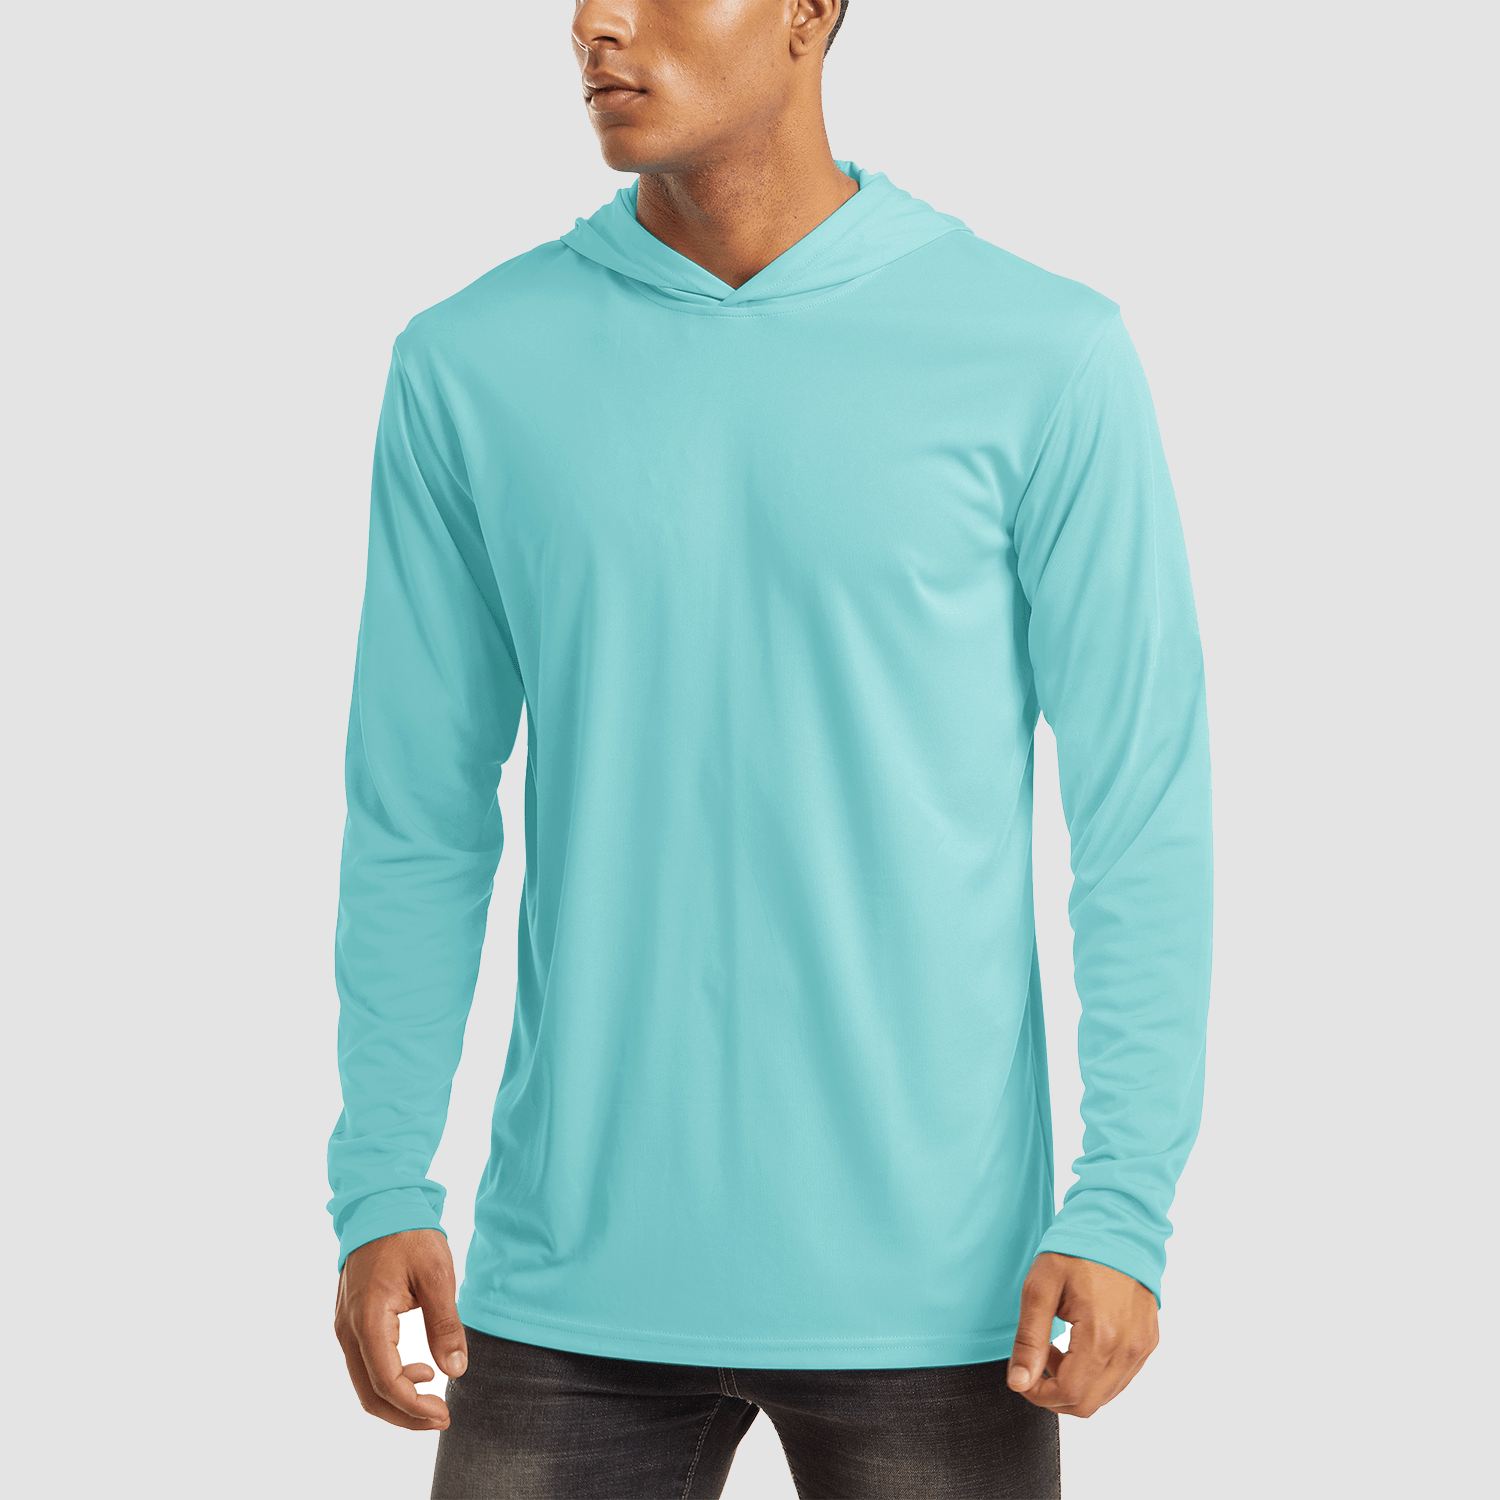 【Buy 4 Get 4th Free】Men's Long Sleeve Hooded Shirt UPF 50+ Athletic Shirts, Grey Green / L